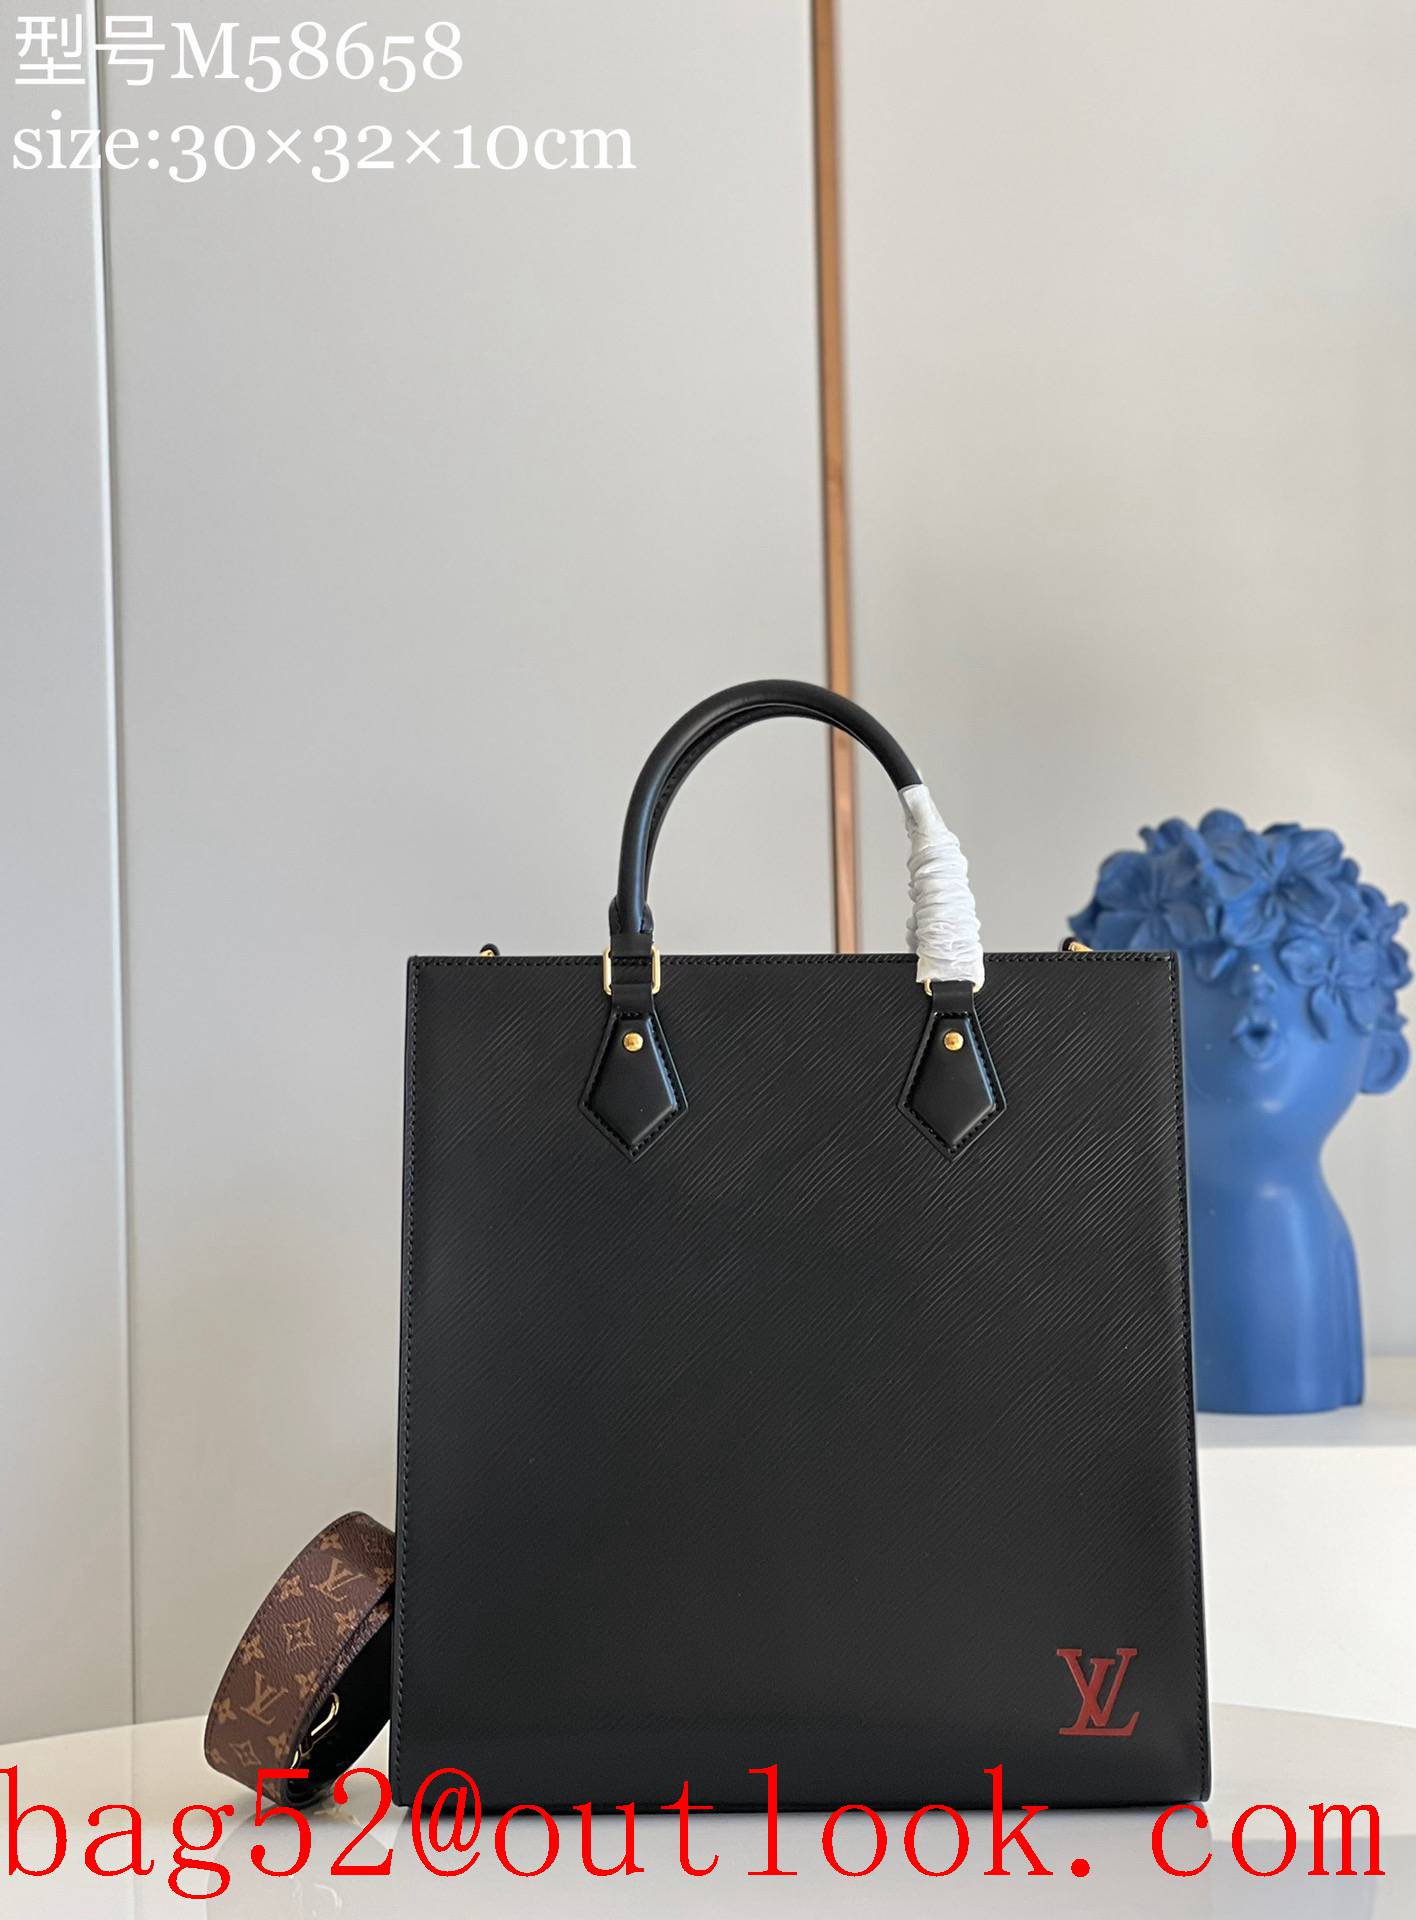 Louis Vuitton LV Sac Plat PM Epi Leather Carryall Bag Handbag M58658 Black